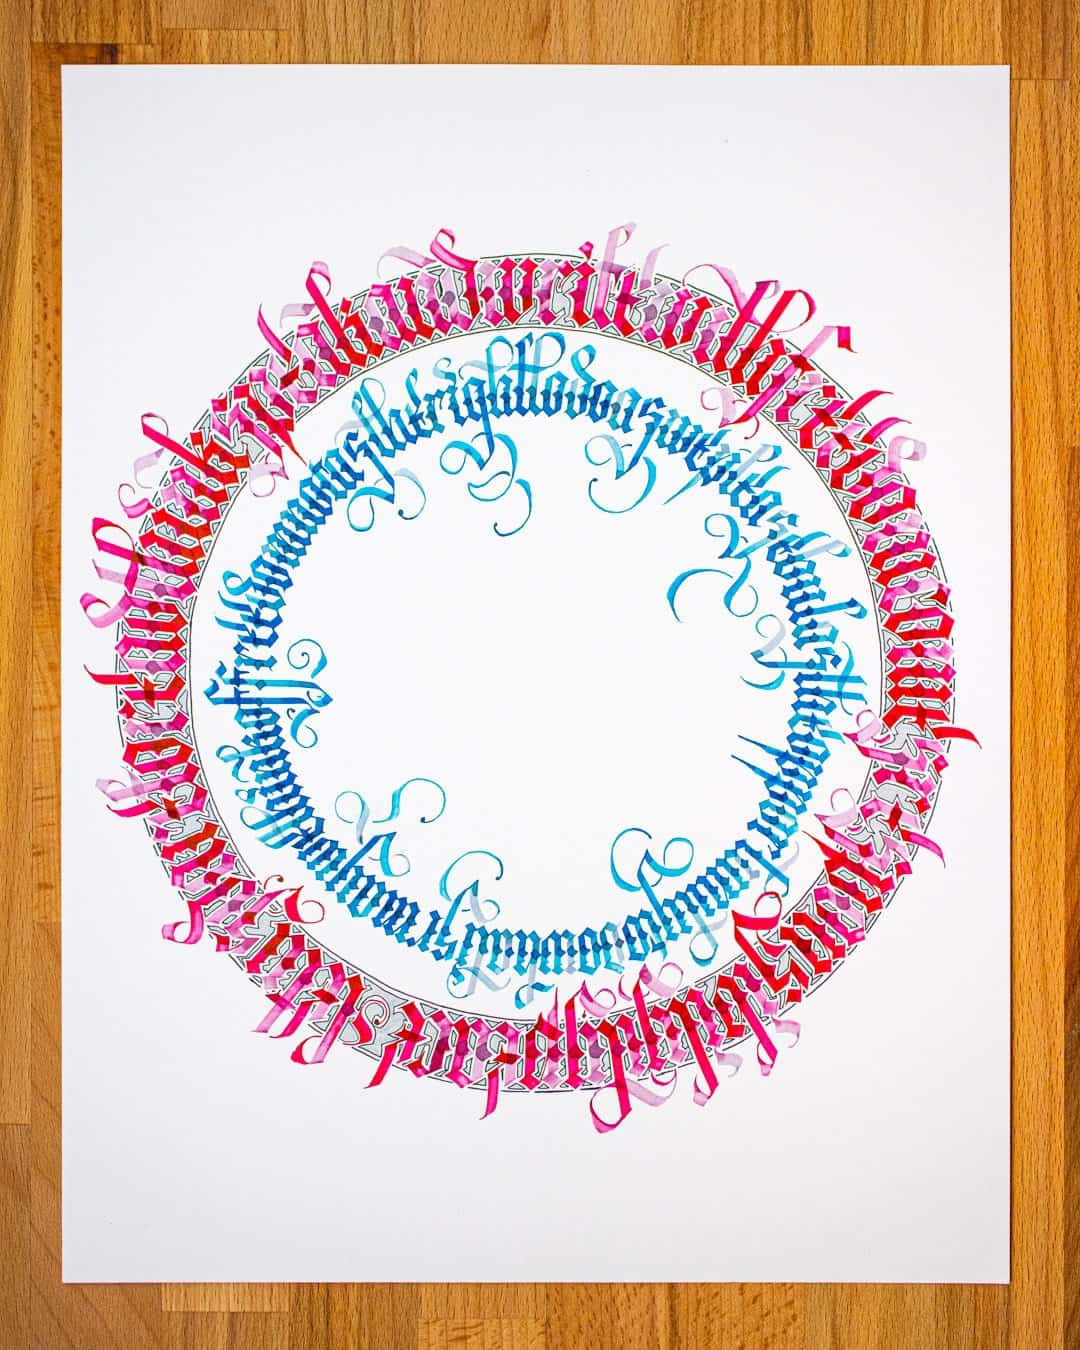 Cover image for the tutorial - circular calligram